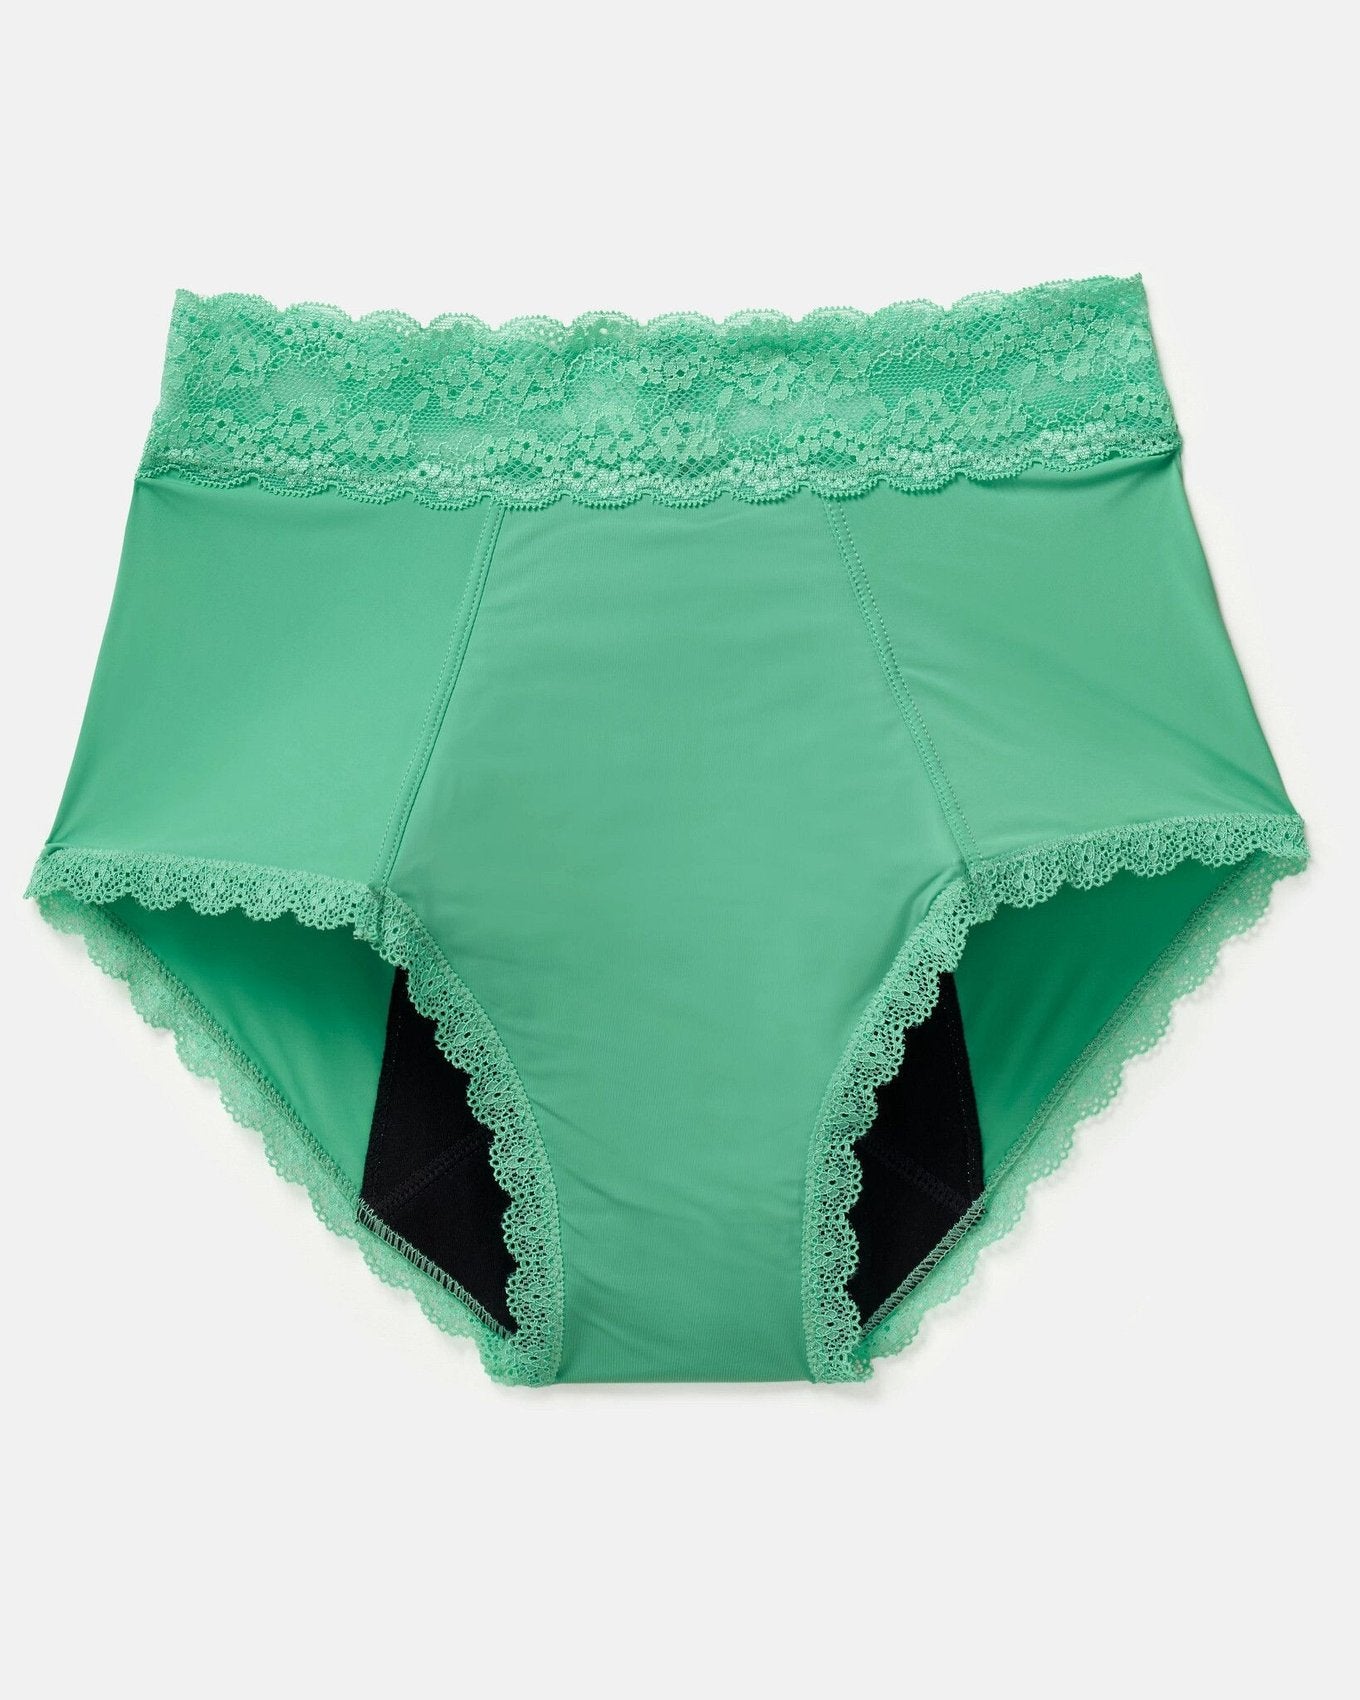 Joyja Amelia period-proof panty in color Jade Cream and shape high waisted